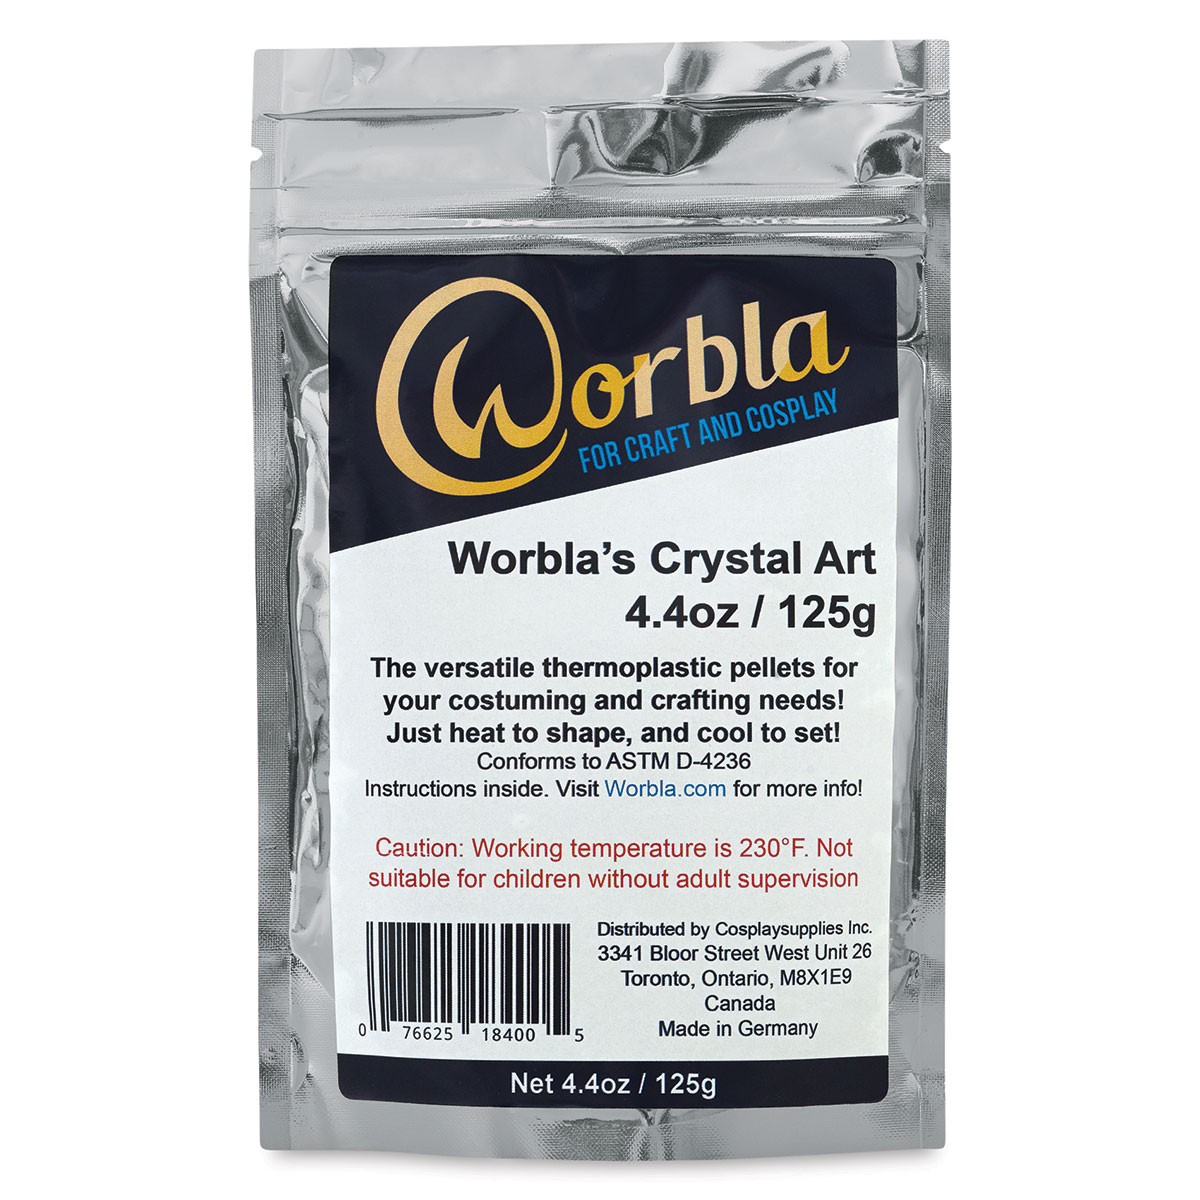 Worbla's Finest Art - Cosplay Supplies Inc